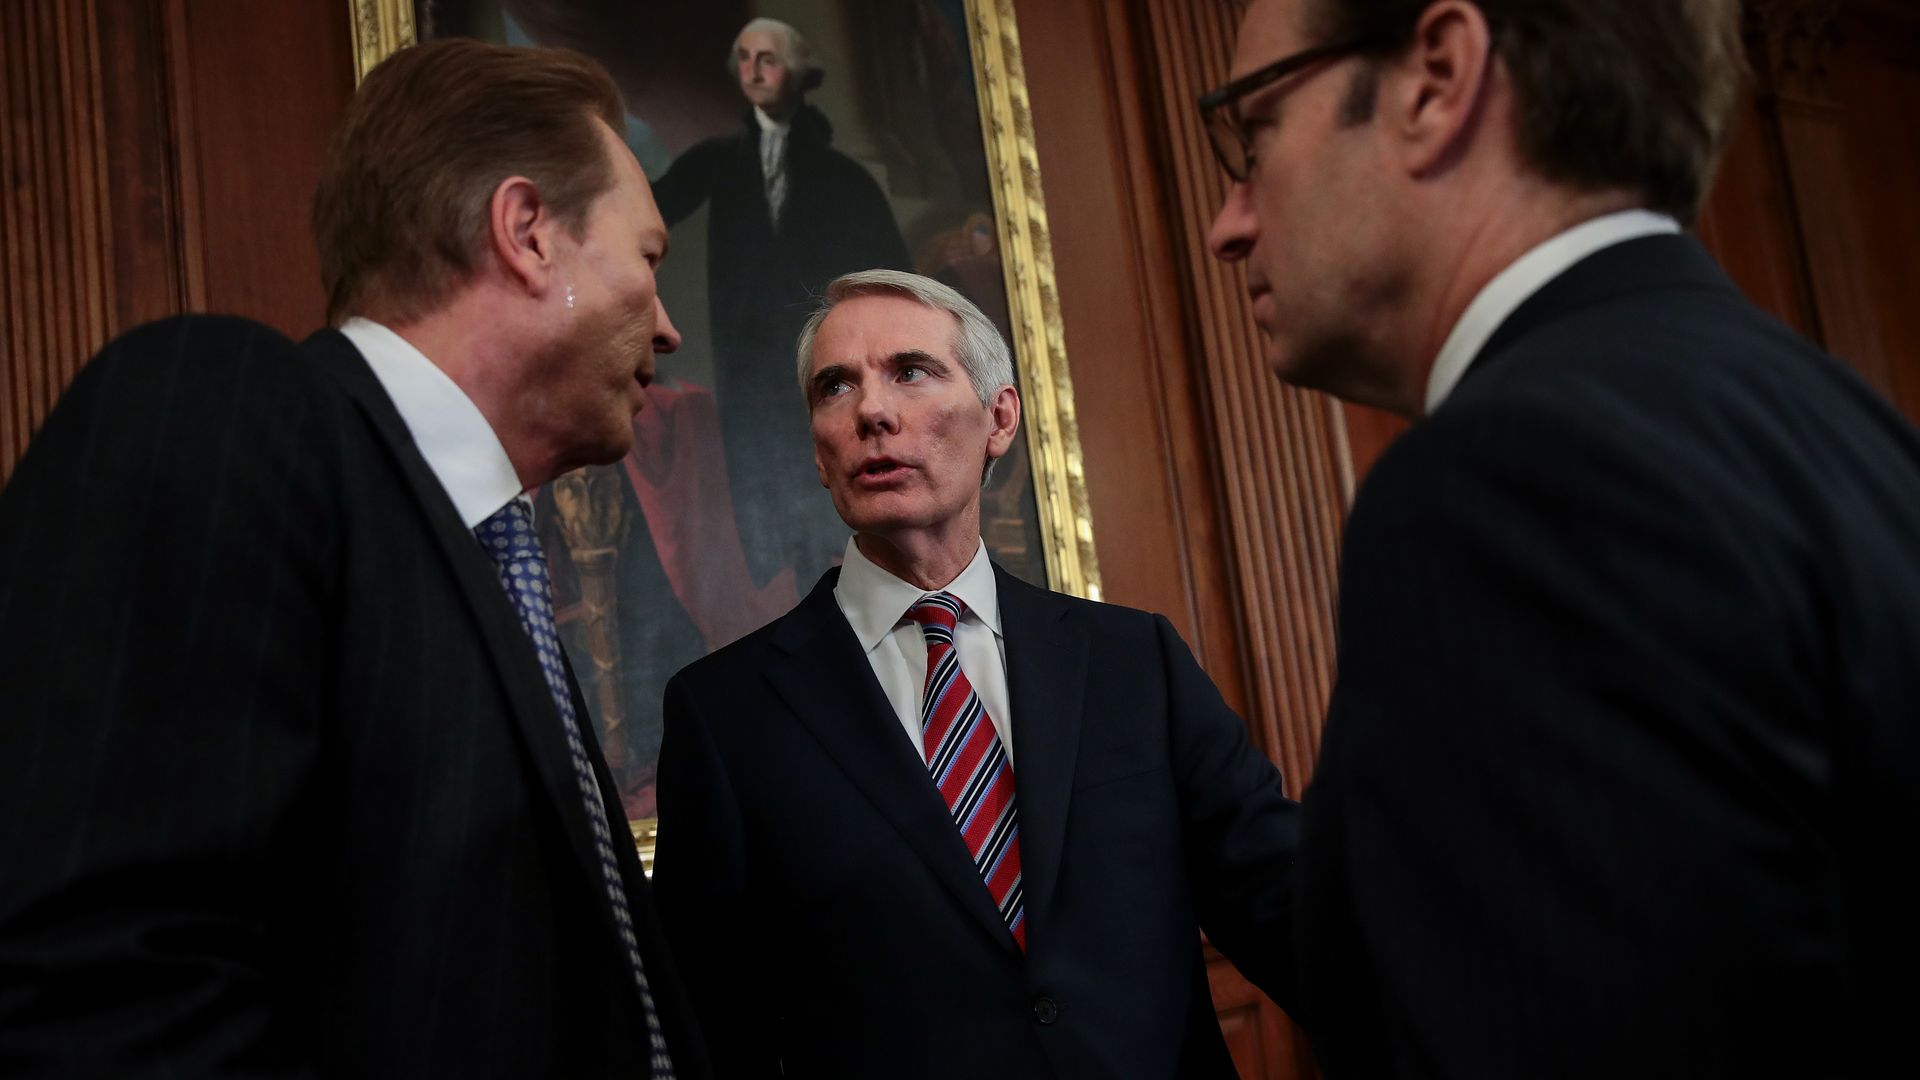 Senator Rob Portman speaks with two men